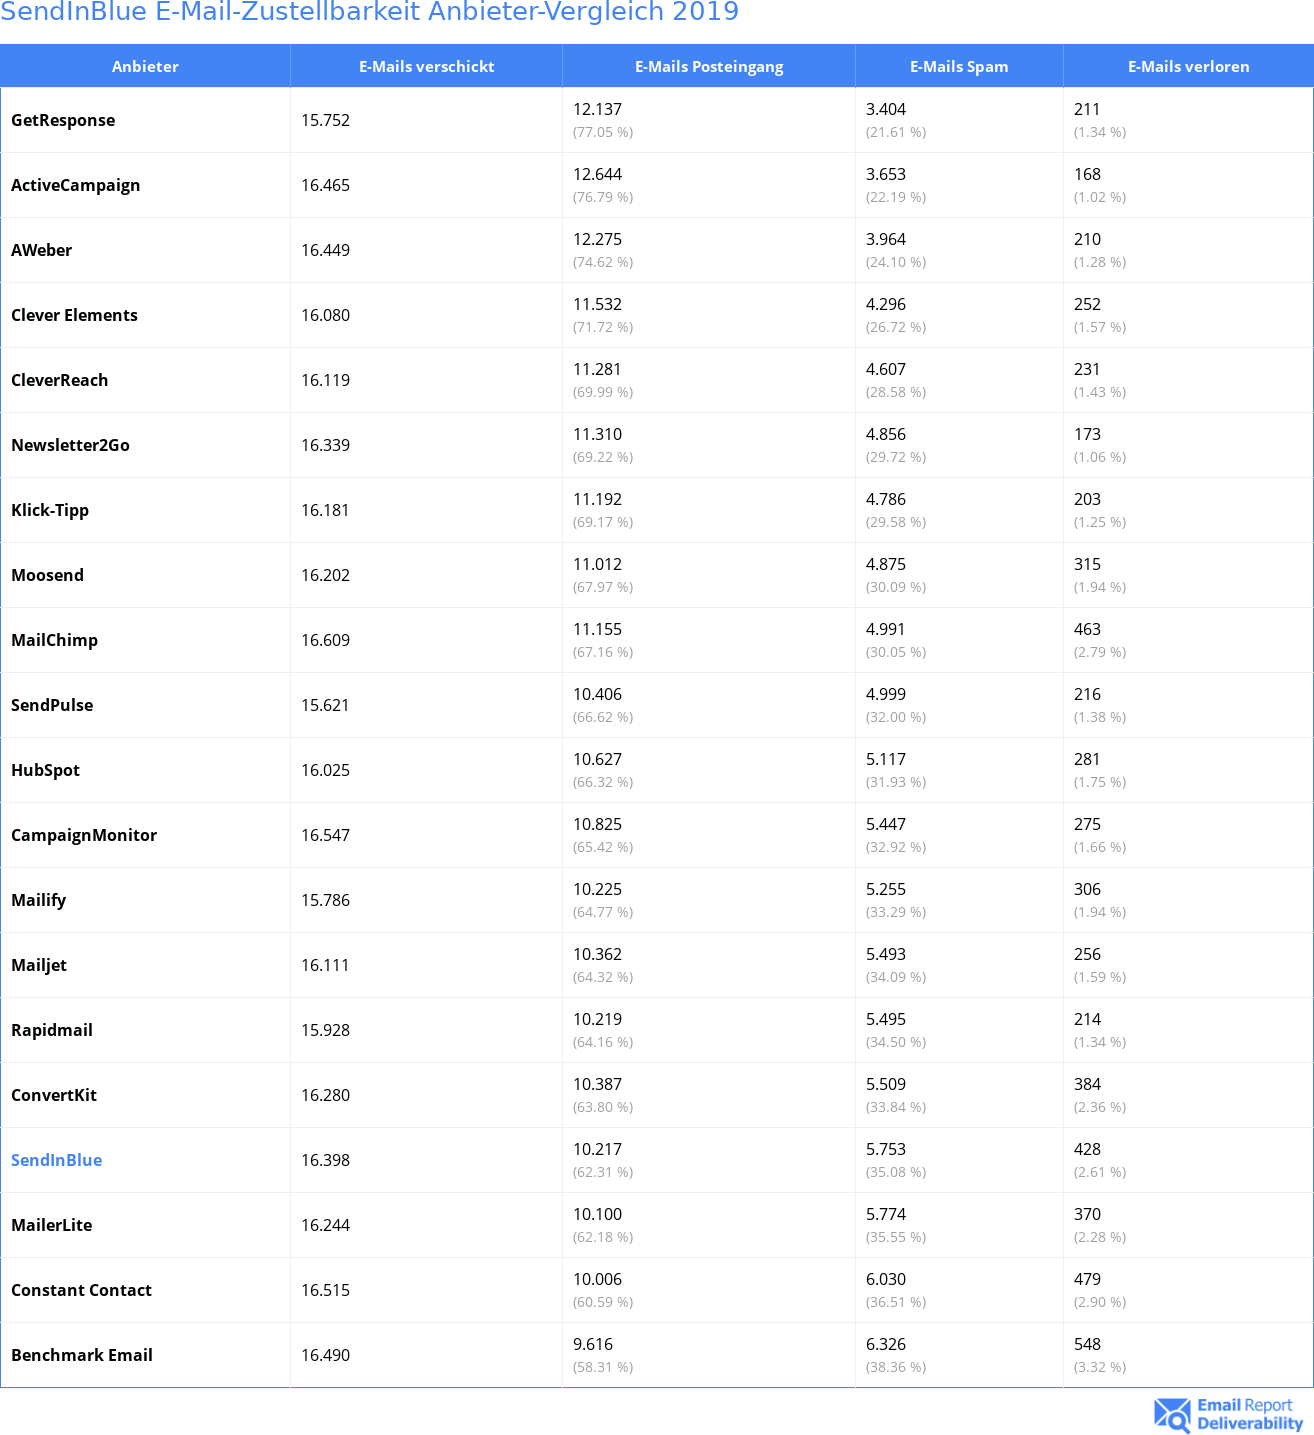 SendInBlue E-Mail-Zustellbarkeit Anbieter-Vergleich 2019